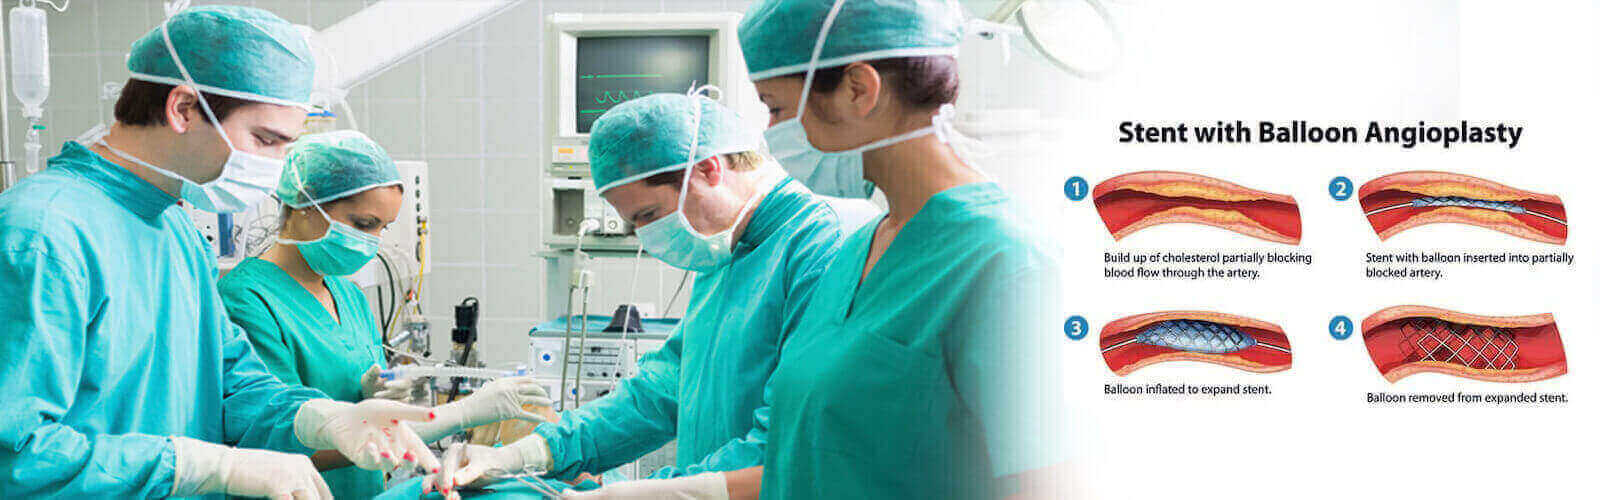 Angioplasty Surgery in Swaziland